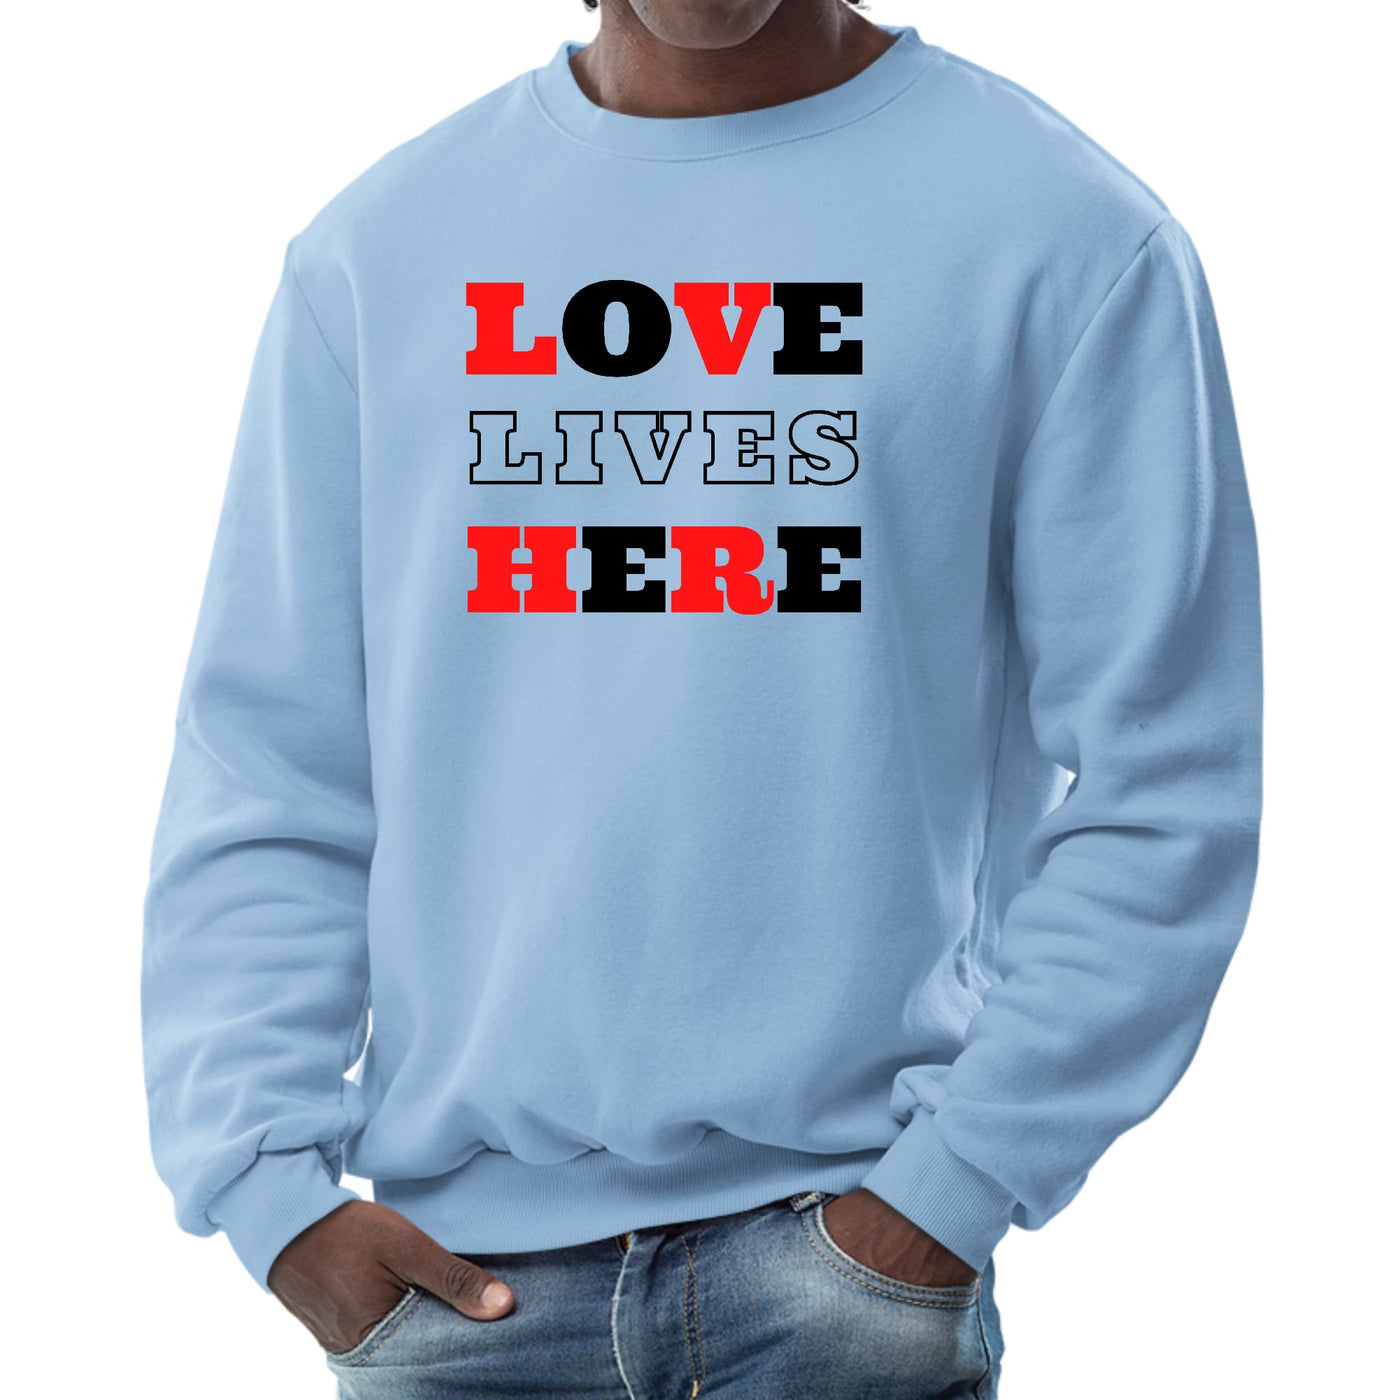 Mens Graphic Sweatshirt Love Lives Here Christian Red Black - Sweatshirts